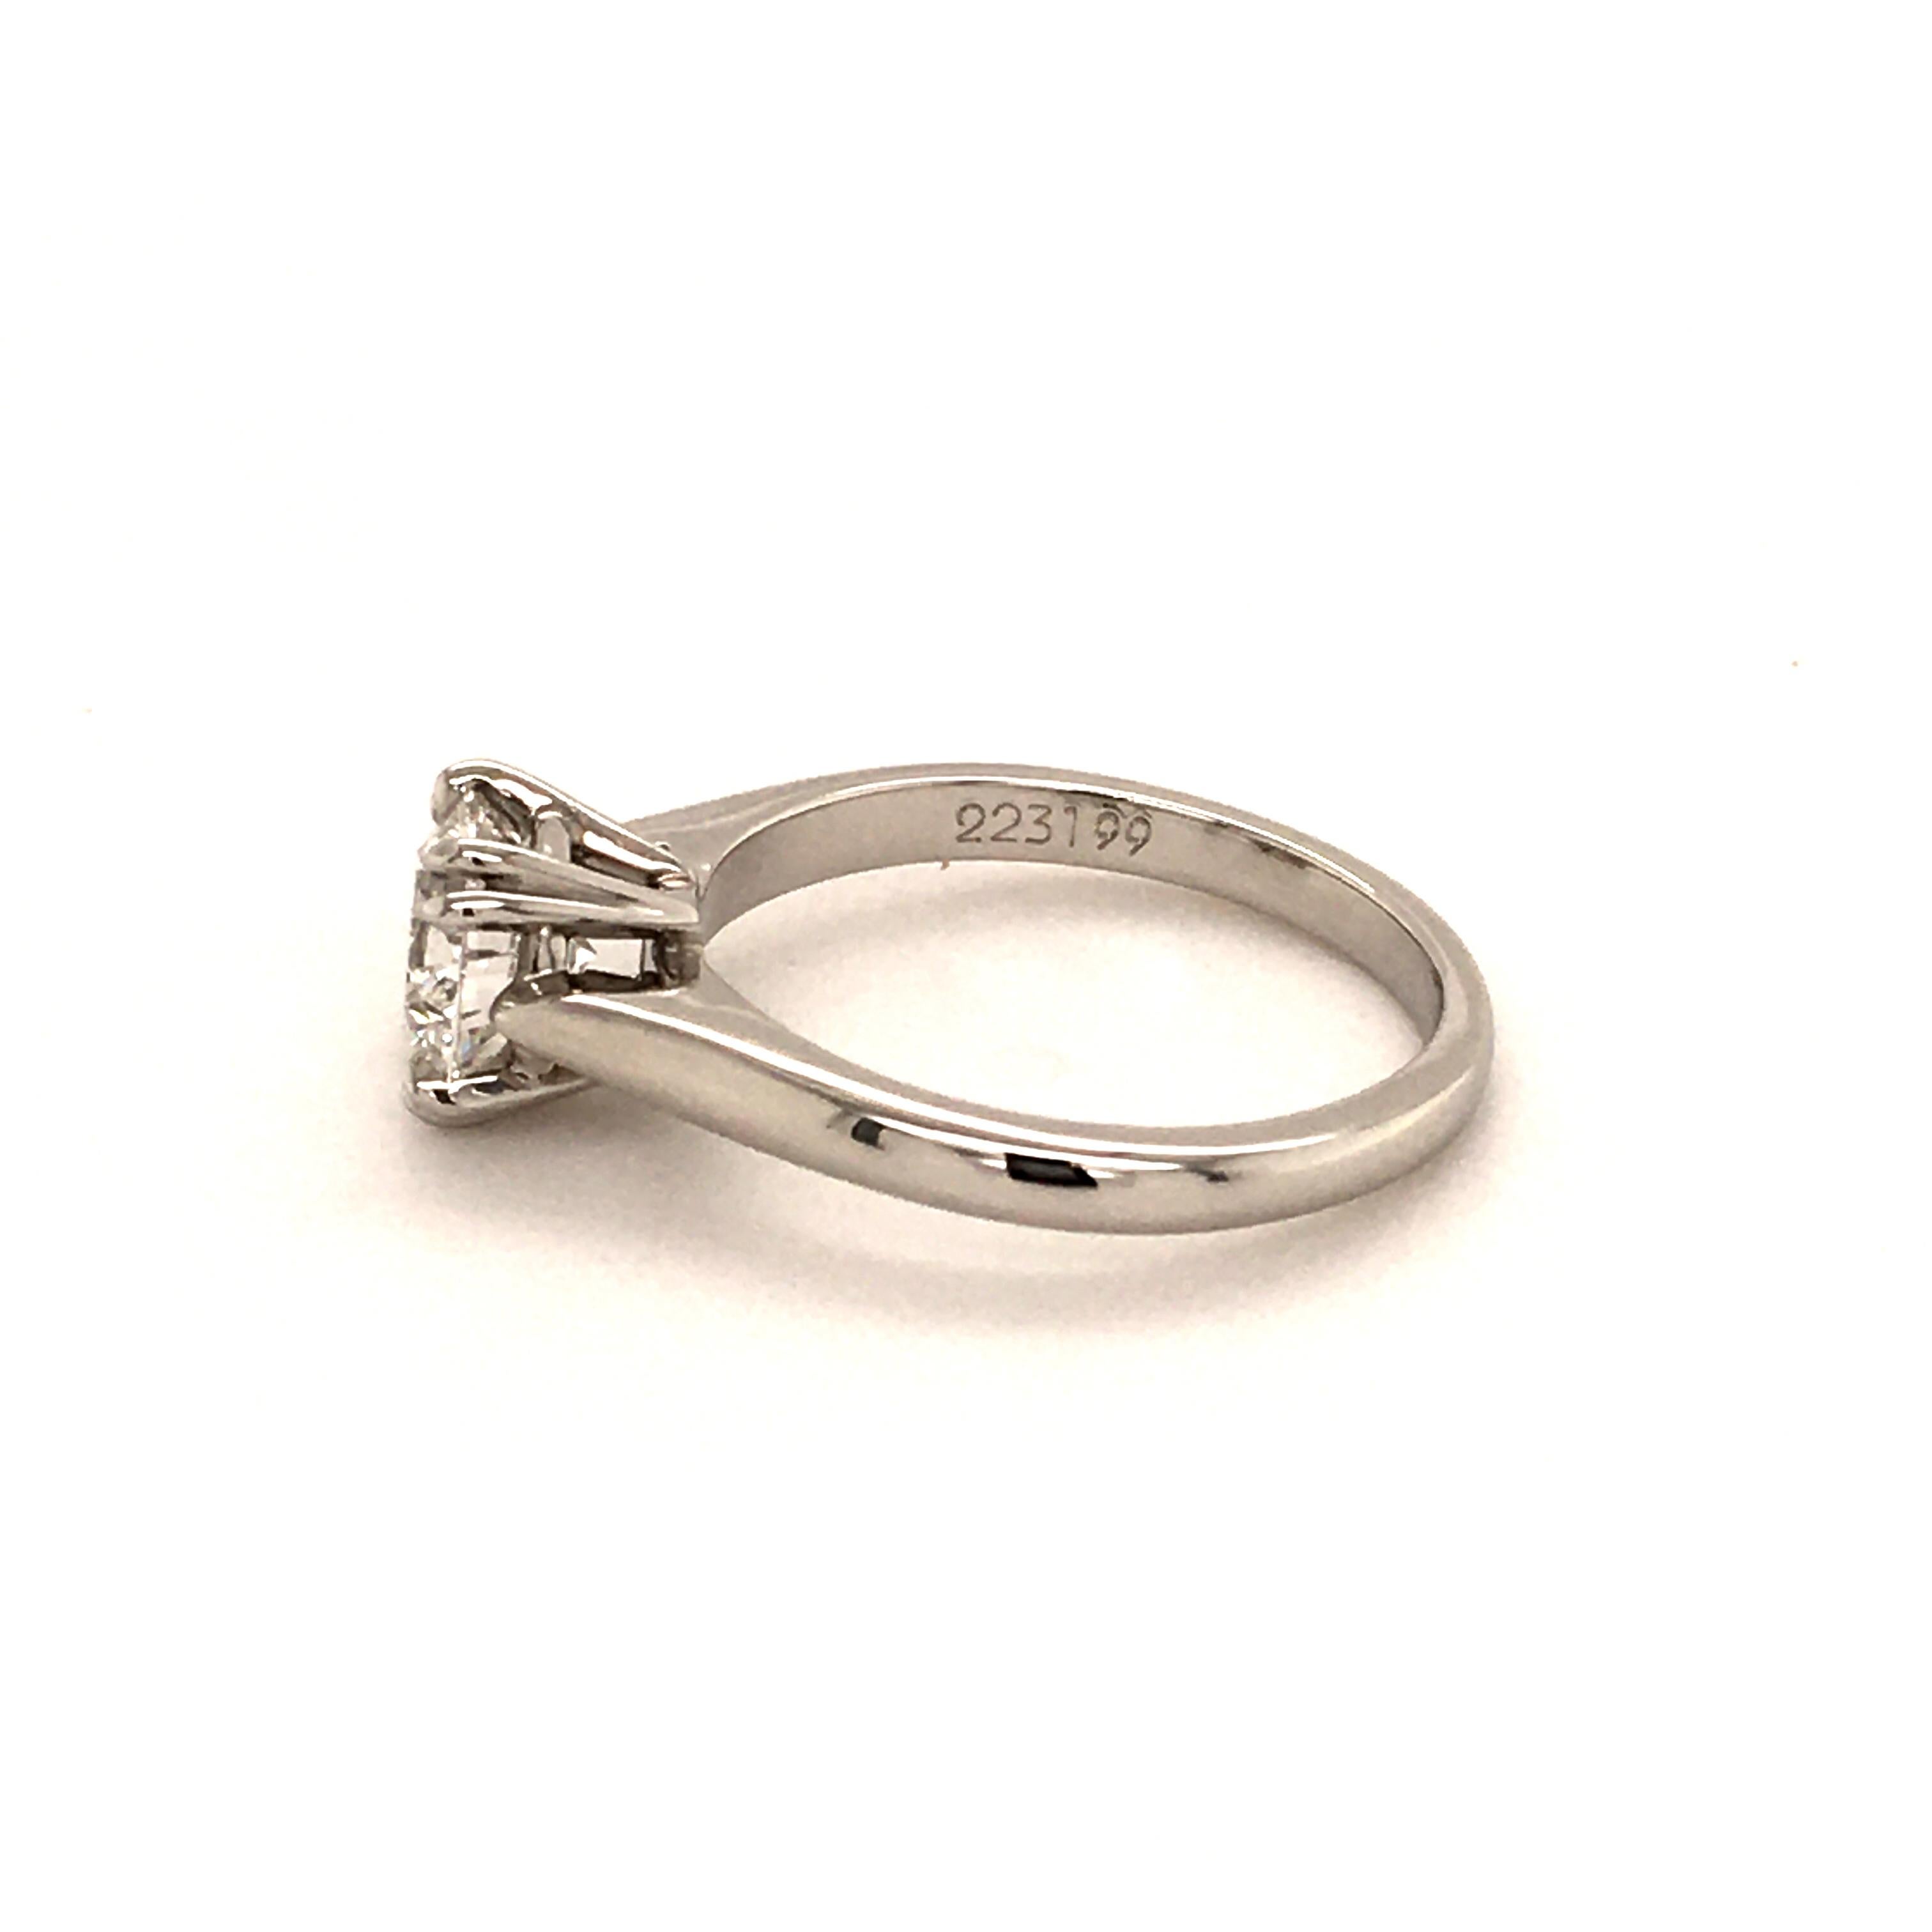 Round Cut Harry Winston 1.11 Carat GIA Certified F-VS1 Diamond Engagement Ring in Platinum